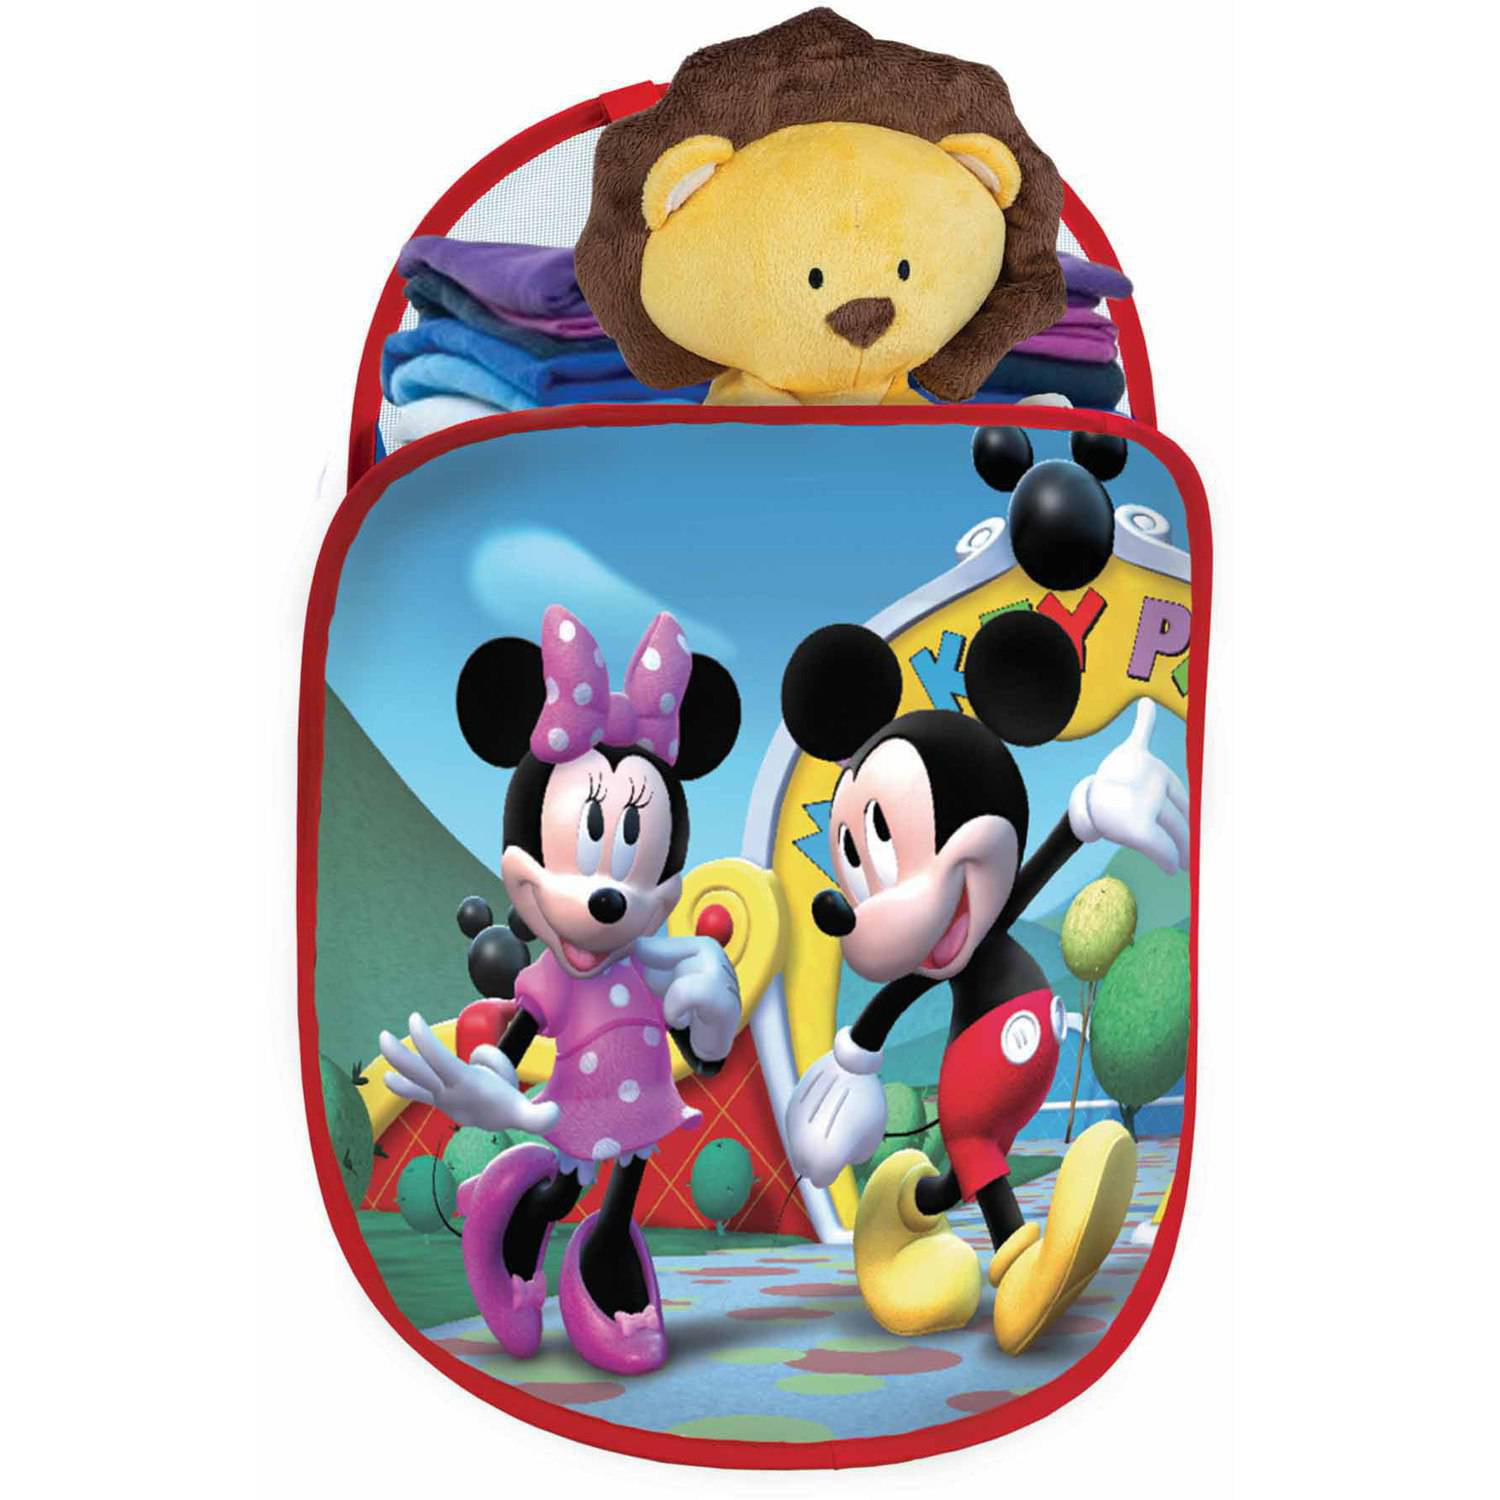 NEW Disney MICKEY MOUSE Toy Figure BUCKET Gift Storage Beach Candy Basket Bin 